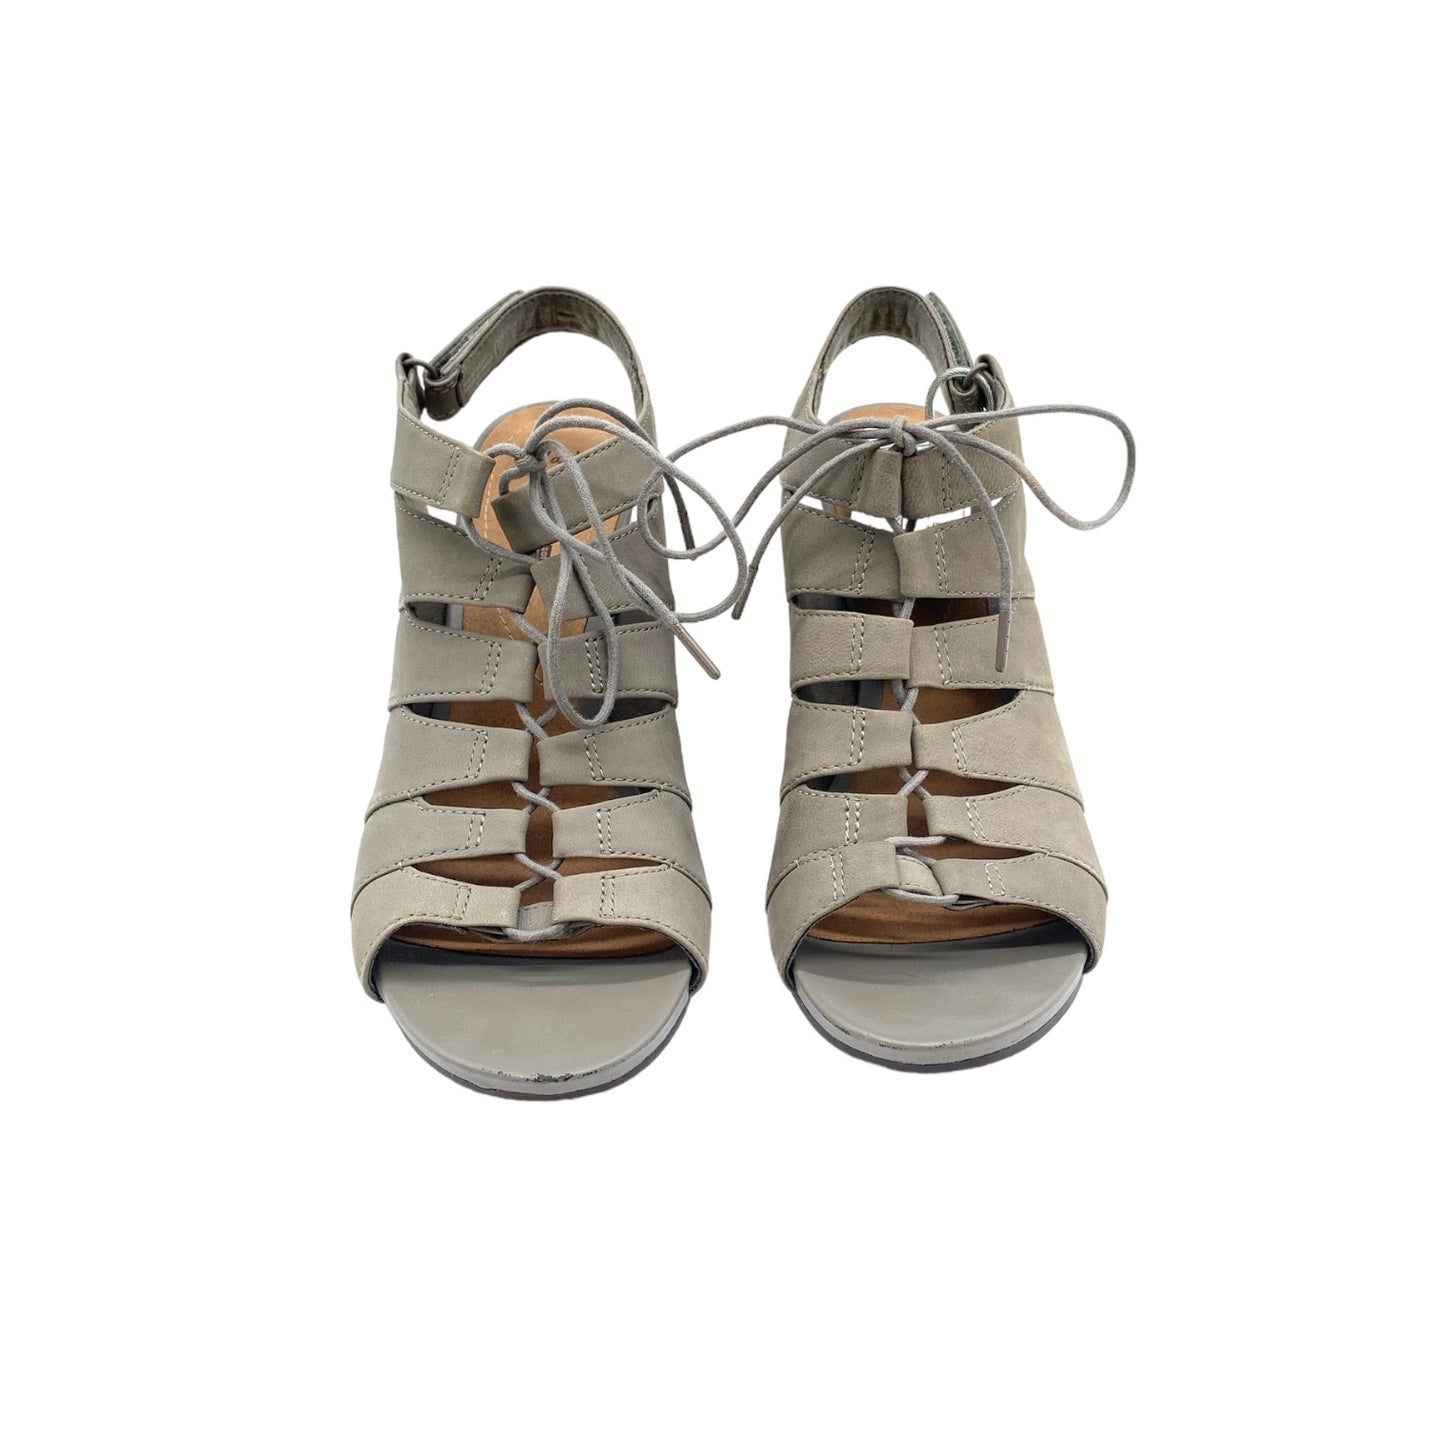 Sandals Heels Block By Clarks  Size: 9